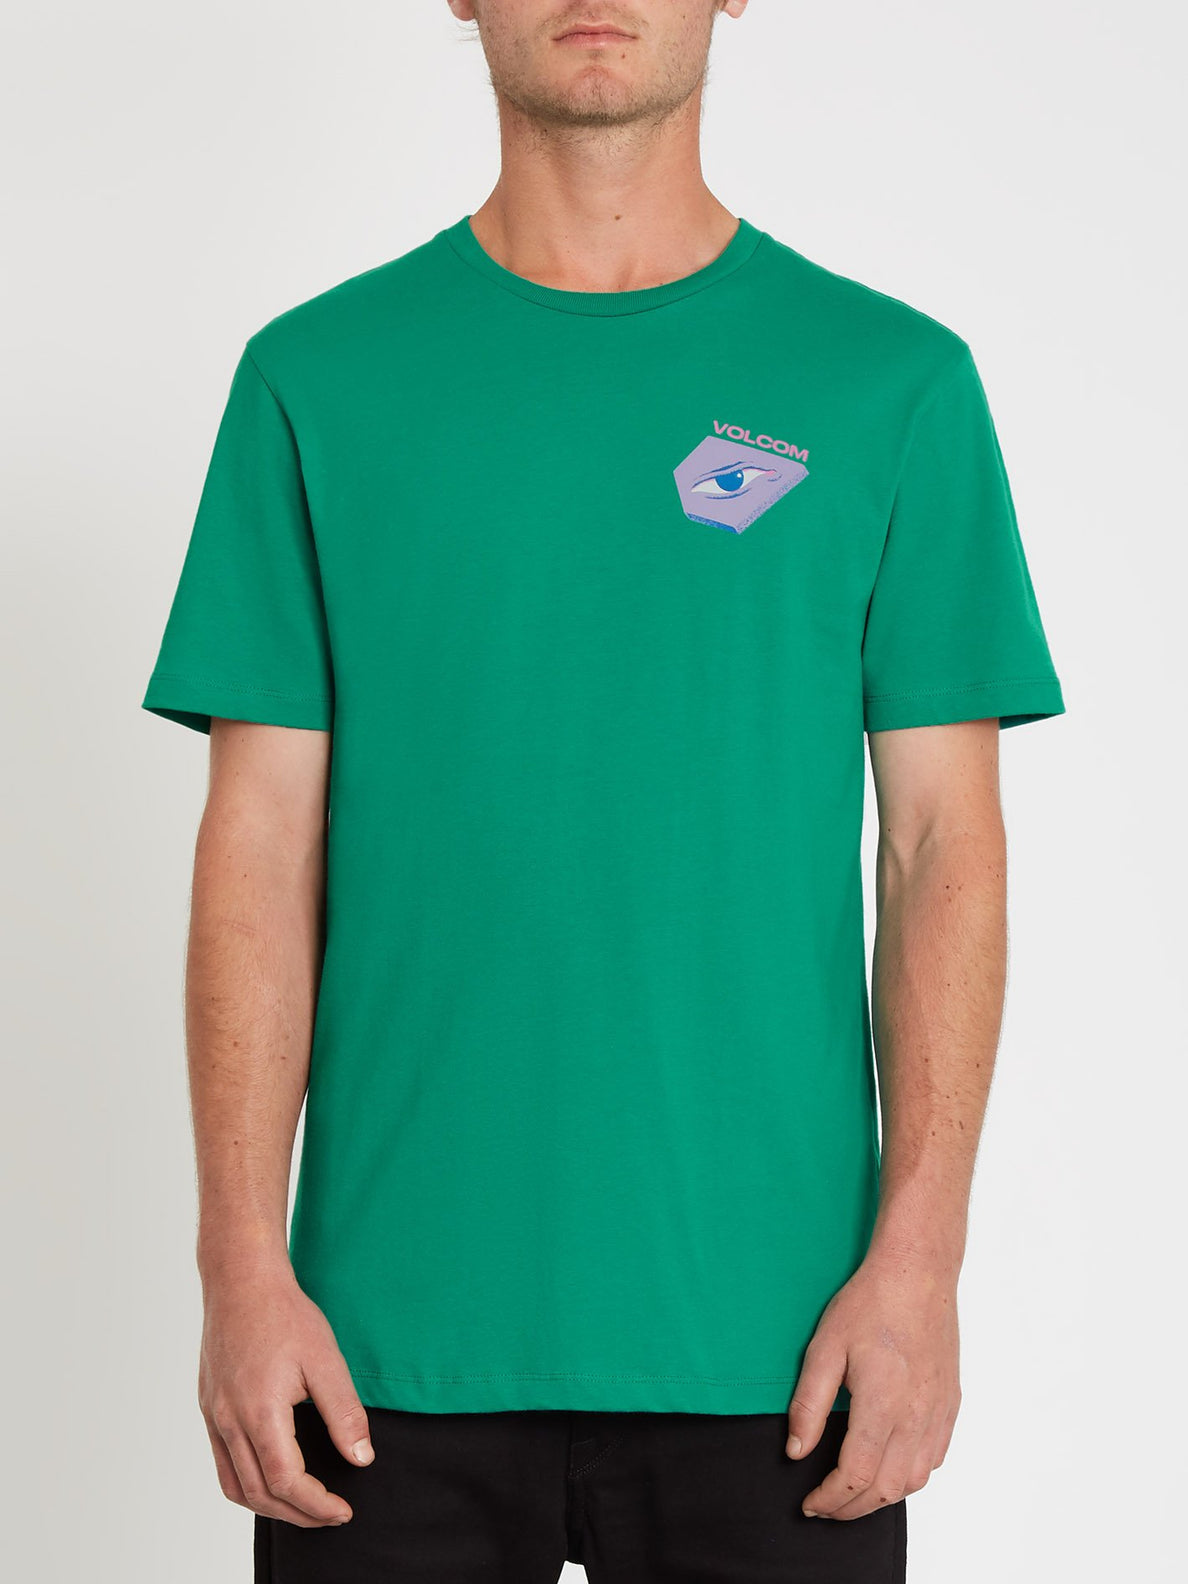 M. Loeffler 2 T-shirt - Synergy Green (A5212115_SYG) [1]